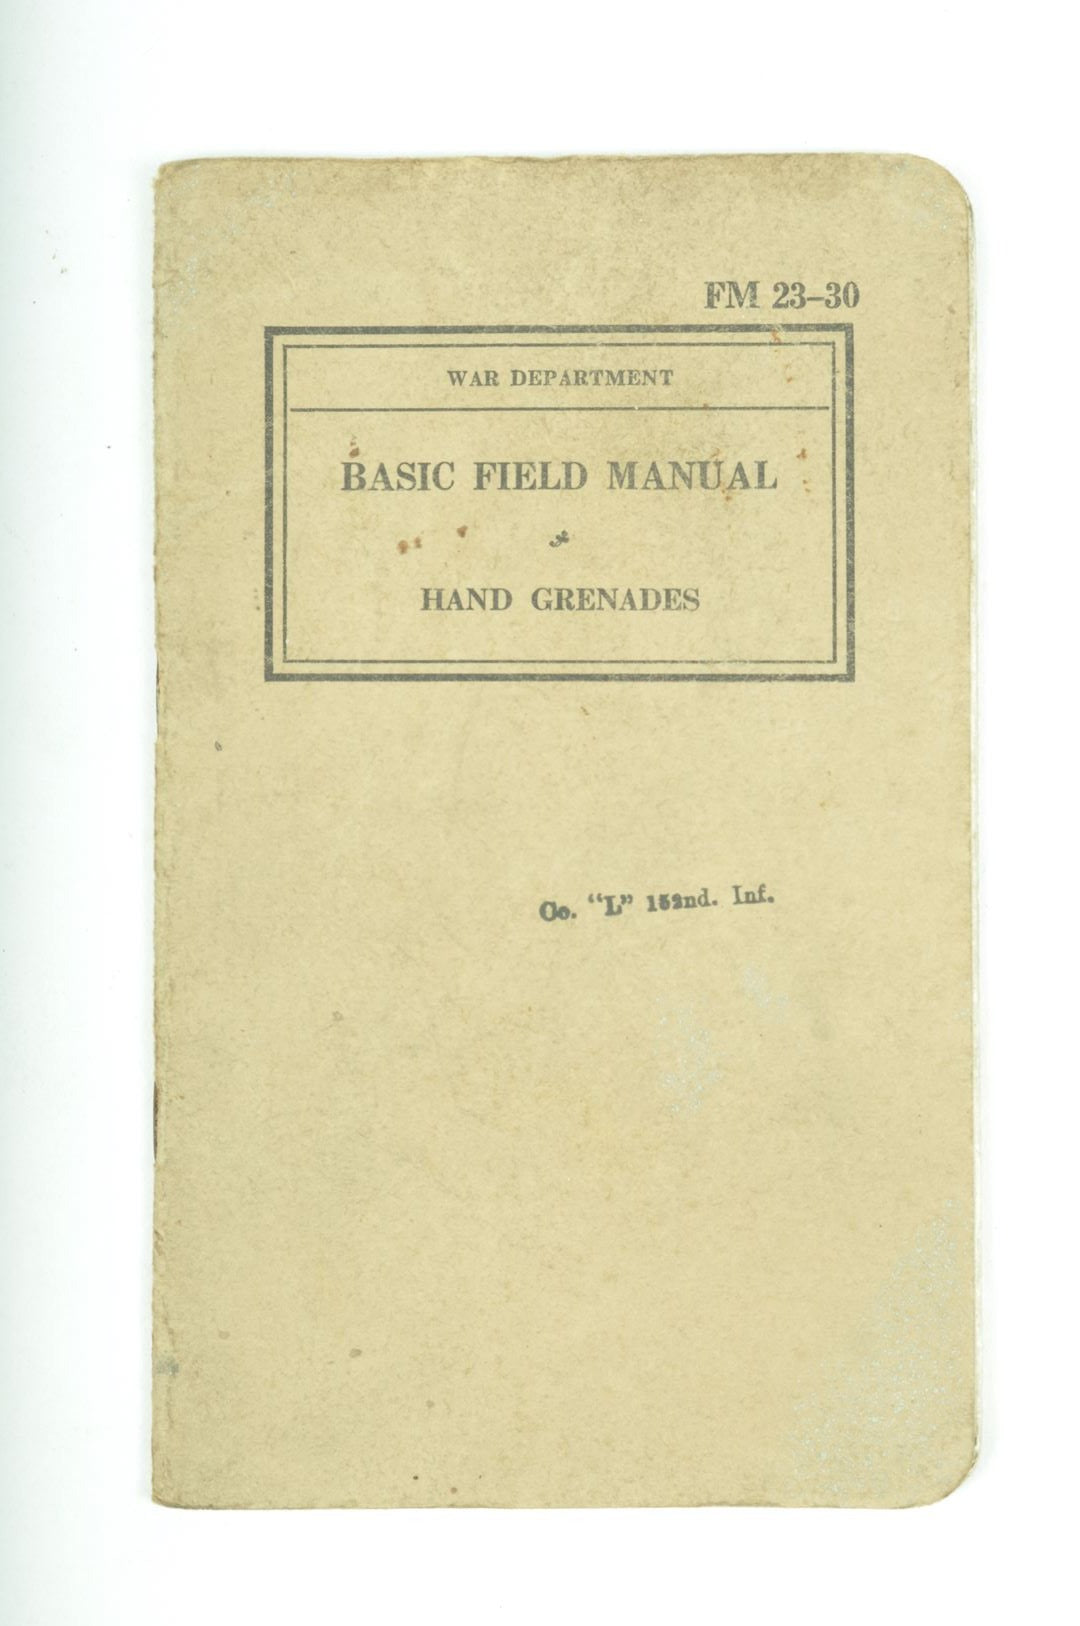 Manuel Américain "Hand Grenades" / 152nd Infantry daté 1940